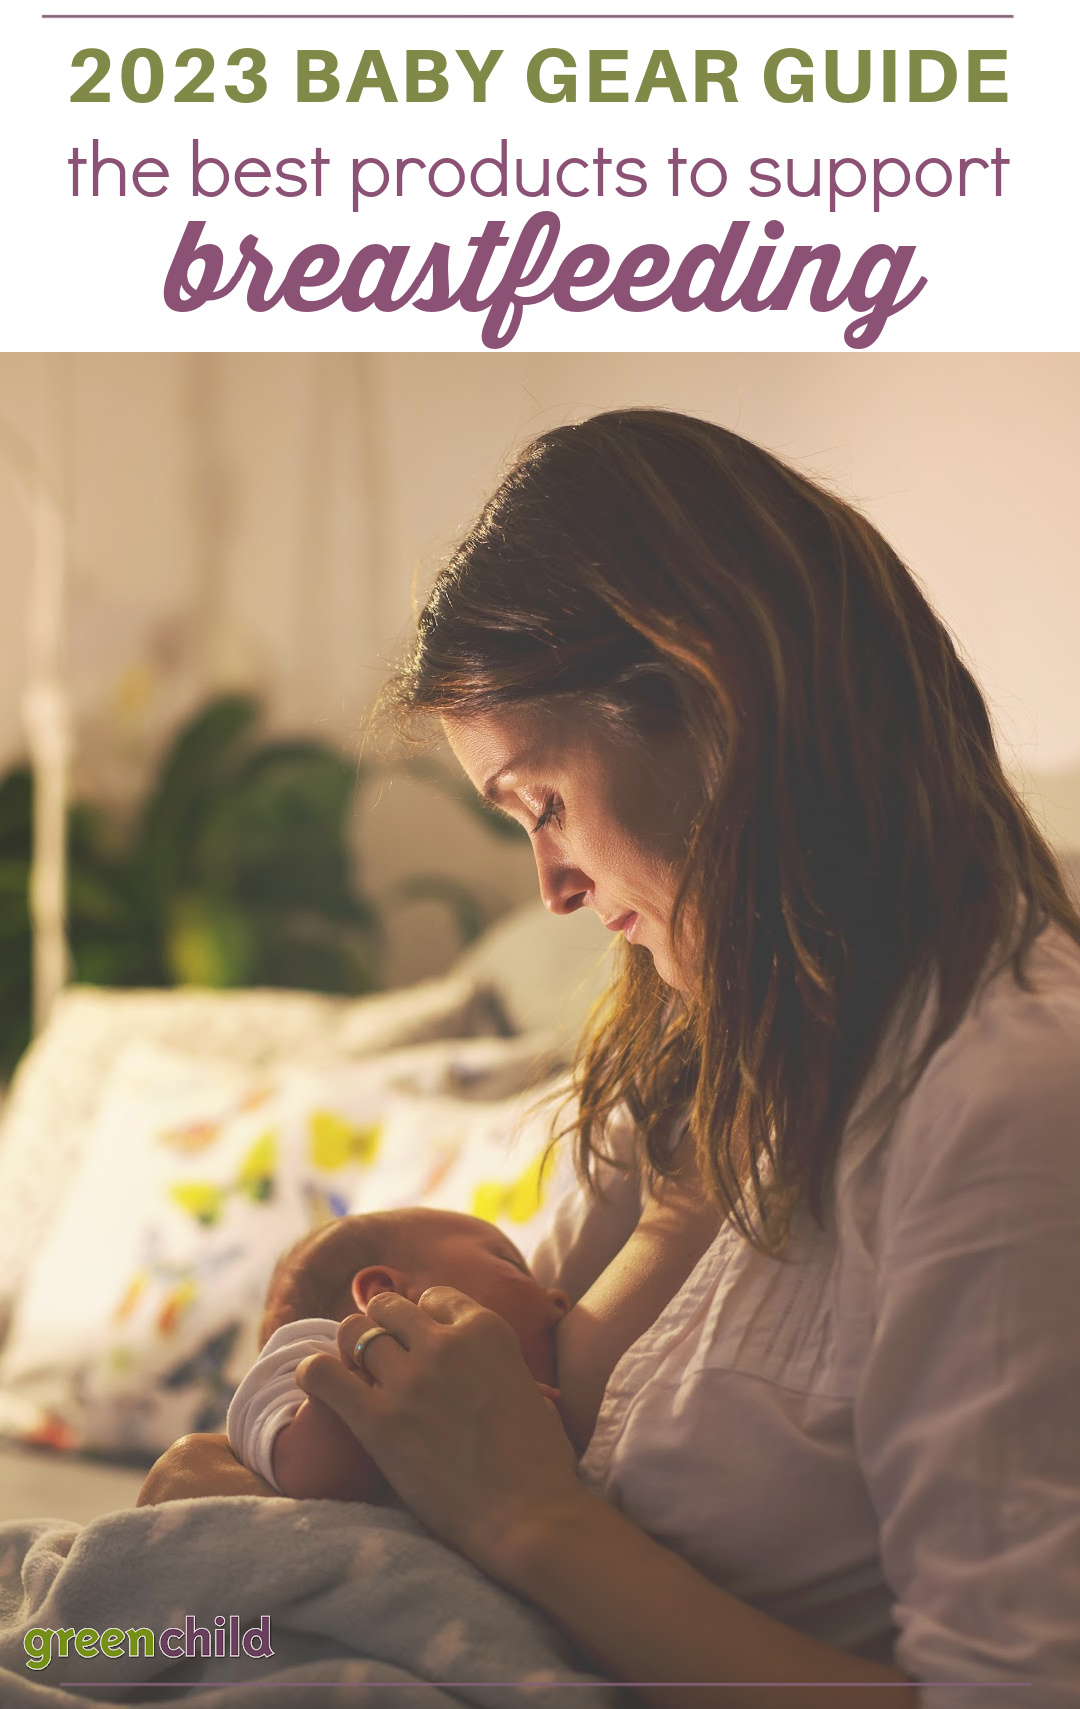 https://www.greenchildmagazine.com/wp-content/uploads/2023/01/2023-breastfeeding-product-guide.jpg